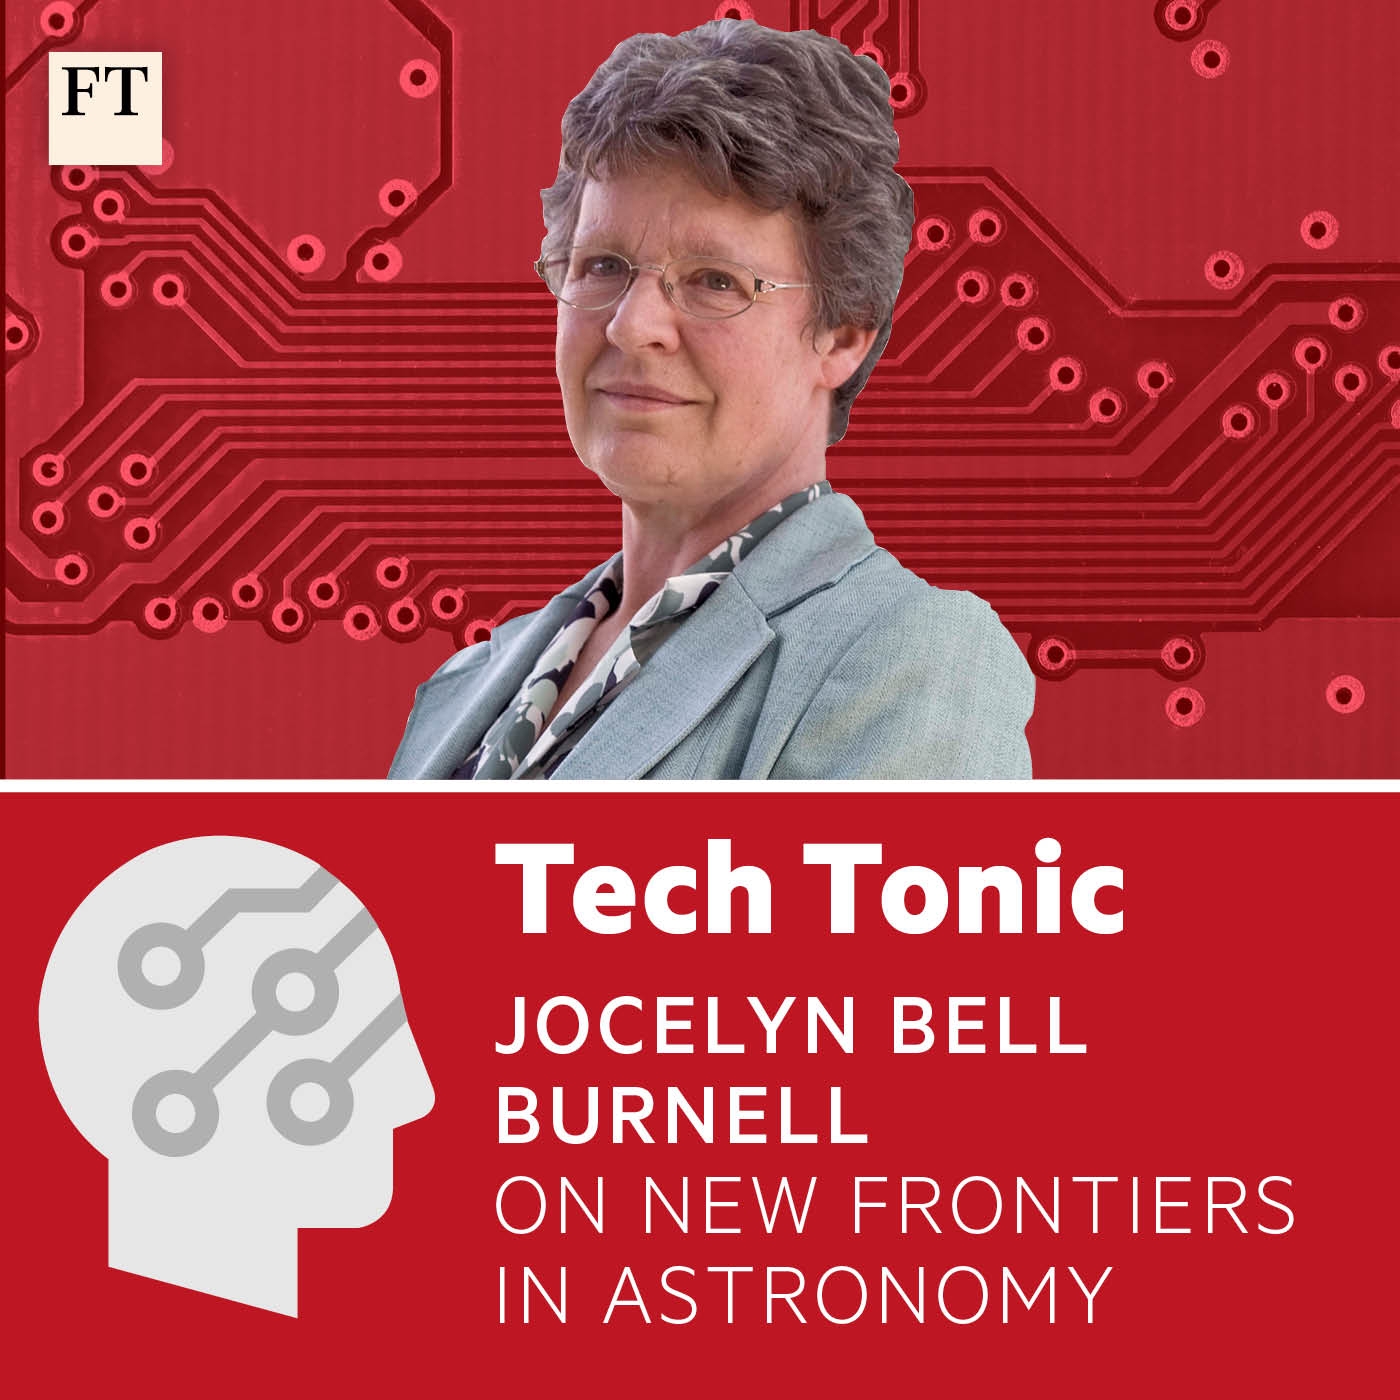 Jocelyn Bell Burnell on new frontiers in astronomy